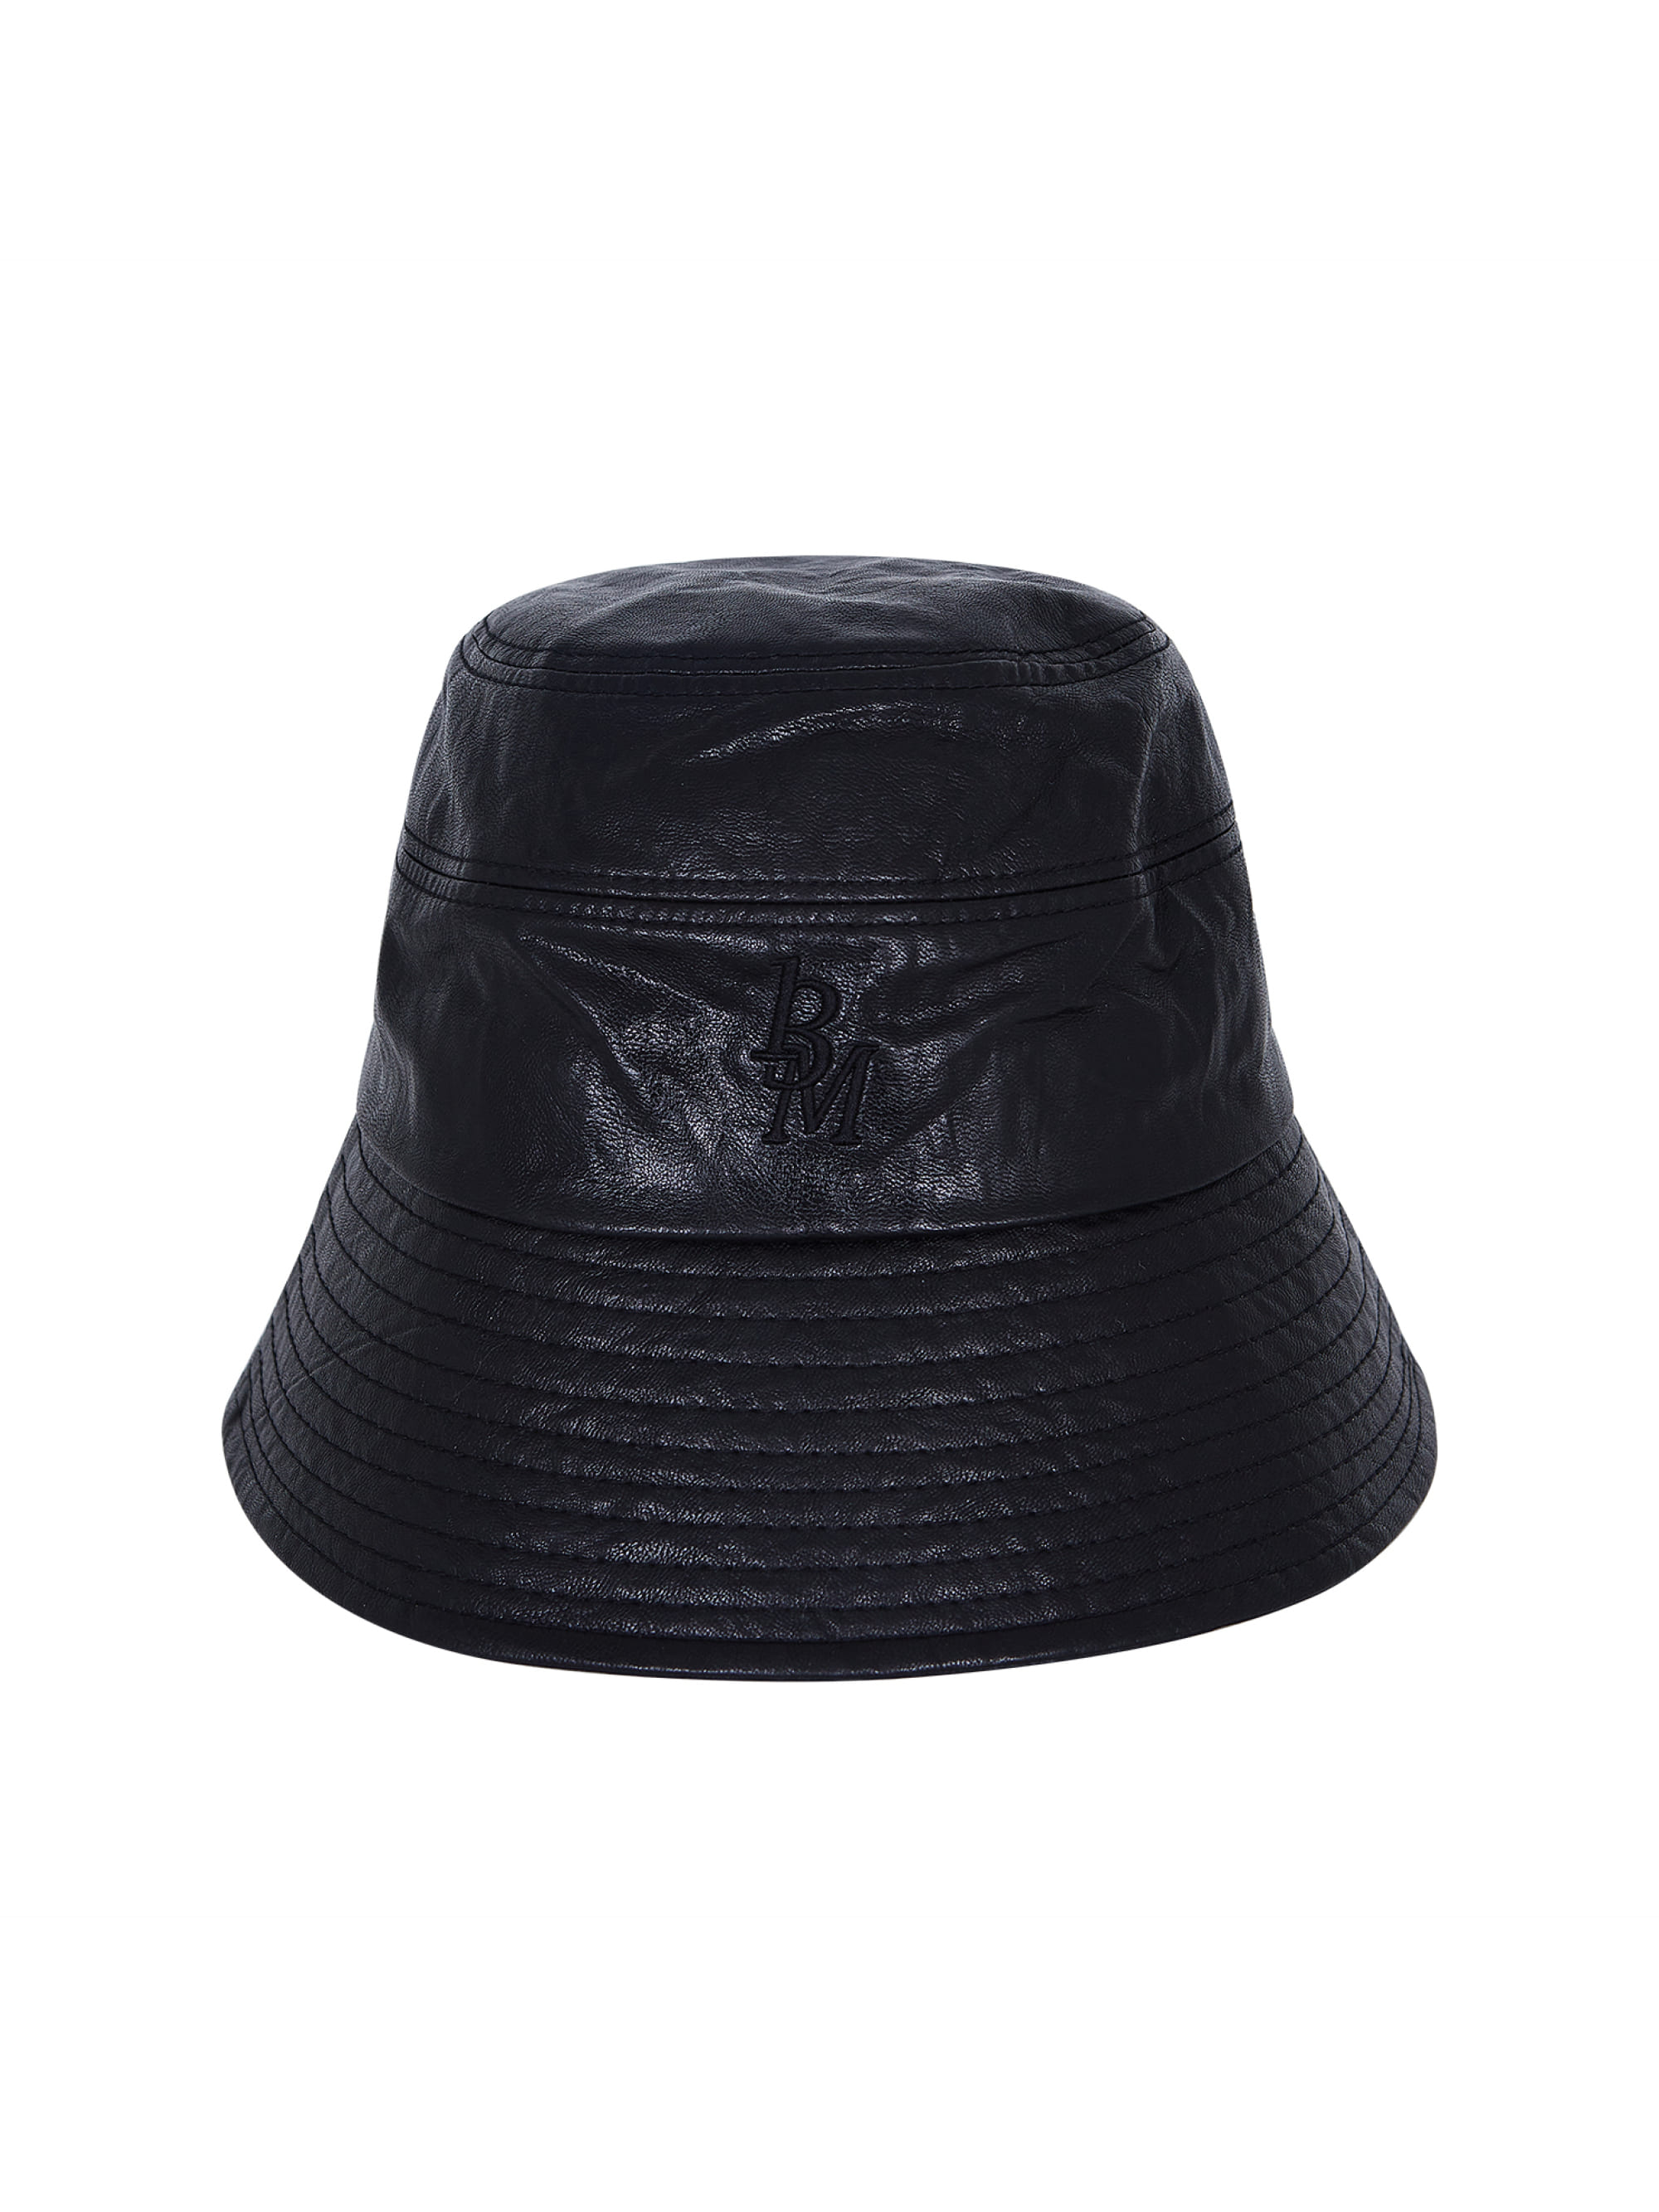 STITCH LEATHER BUCKET HAT (BLACK)